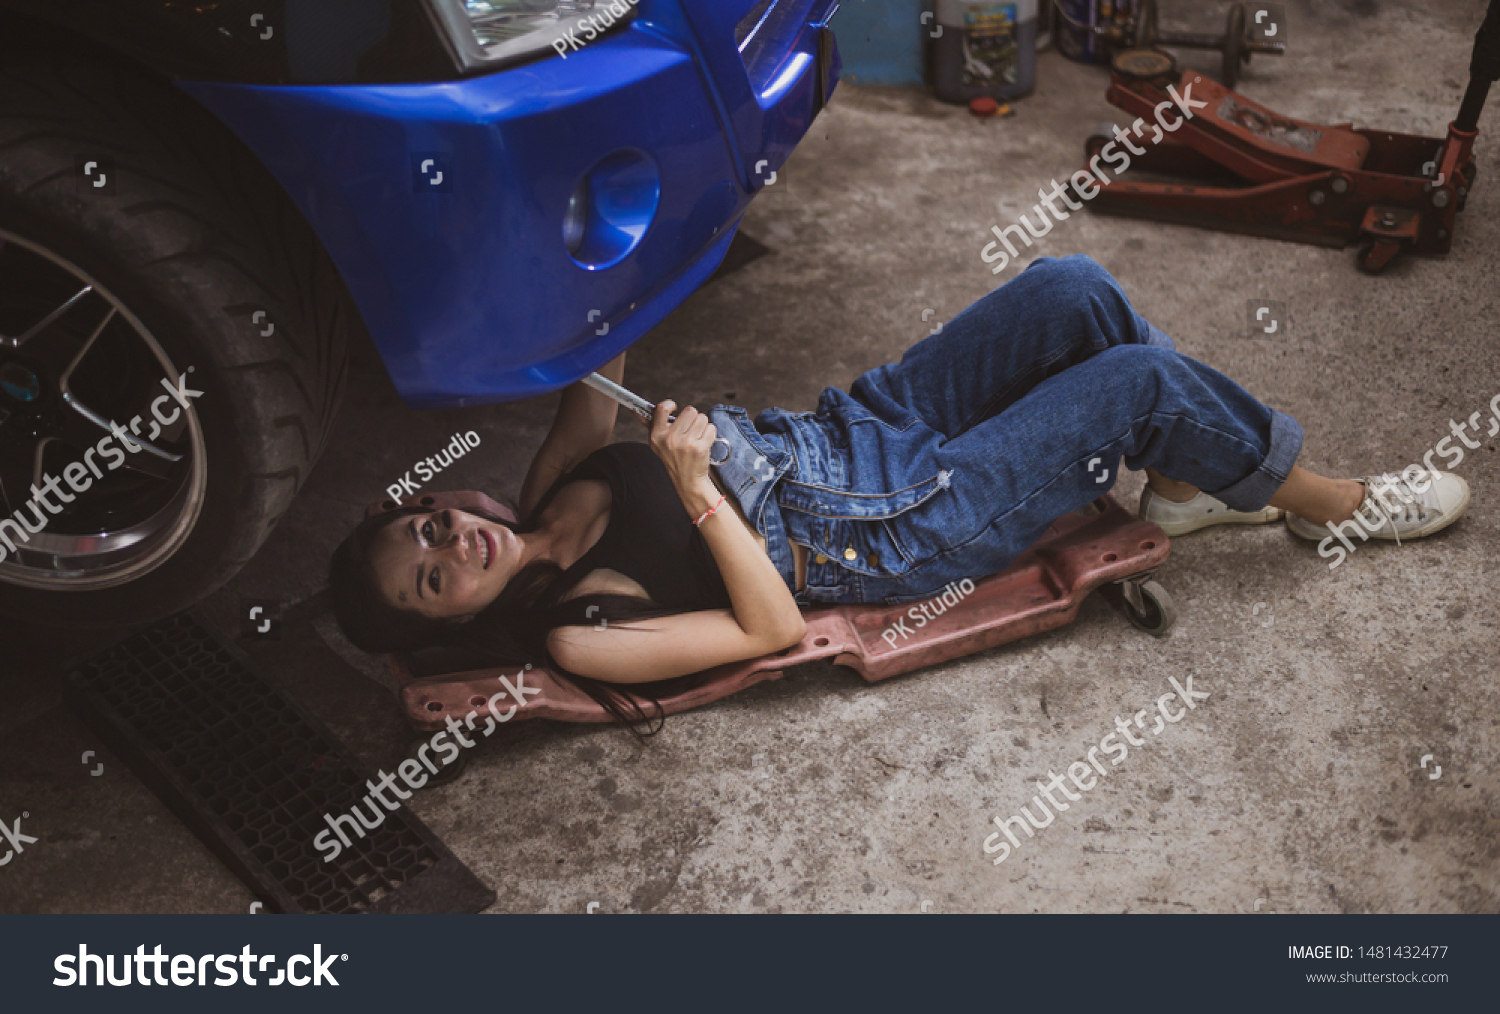 Mechanics Creeper Images, Stock Photos & Vectors | Shutterstock